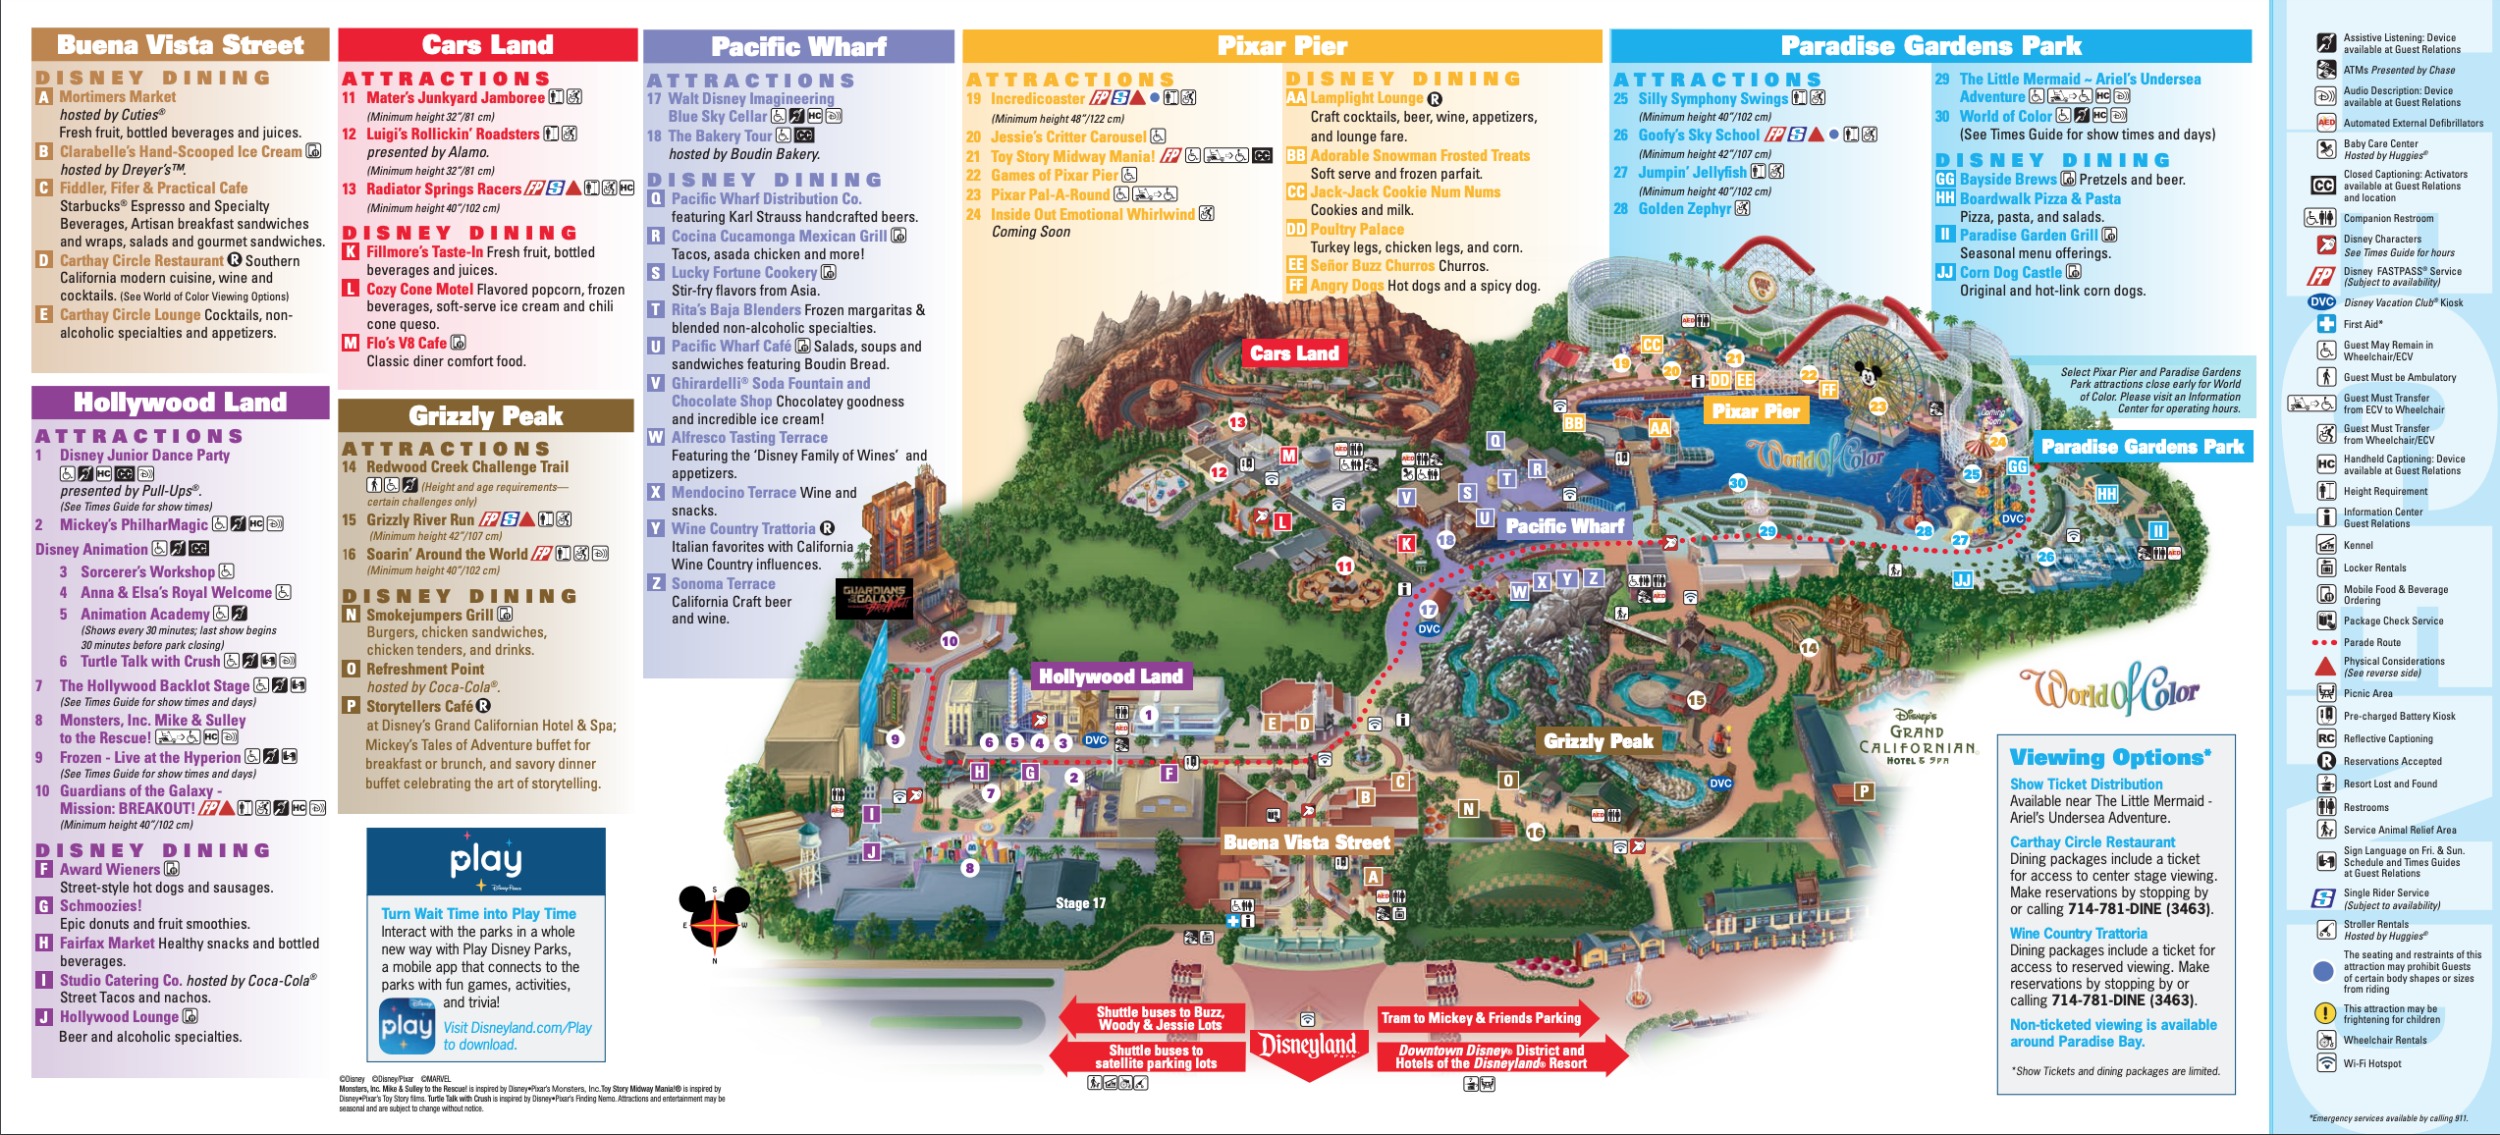 Disney California Adventure Park Map 